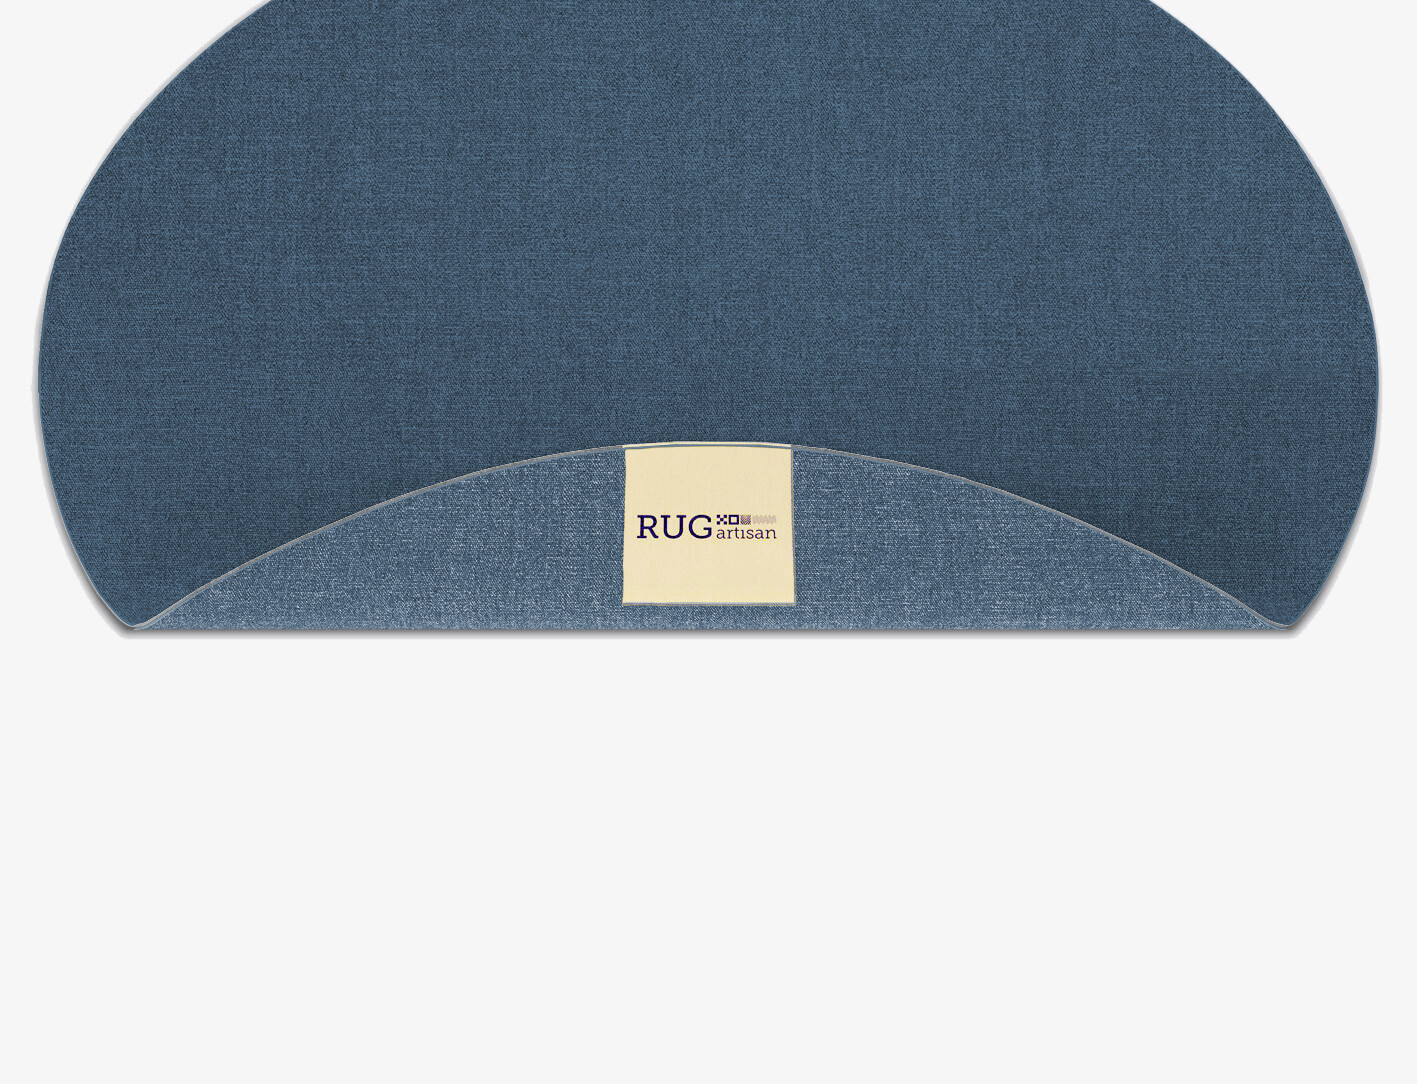 RA-BG04 Solid Colors Oval Flatweave New Zealand Wool Custom Rug by Rug Artisan